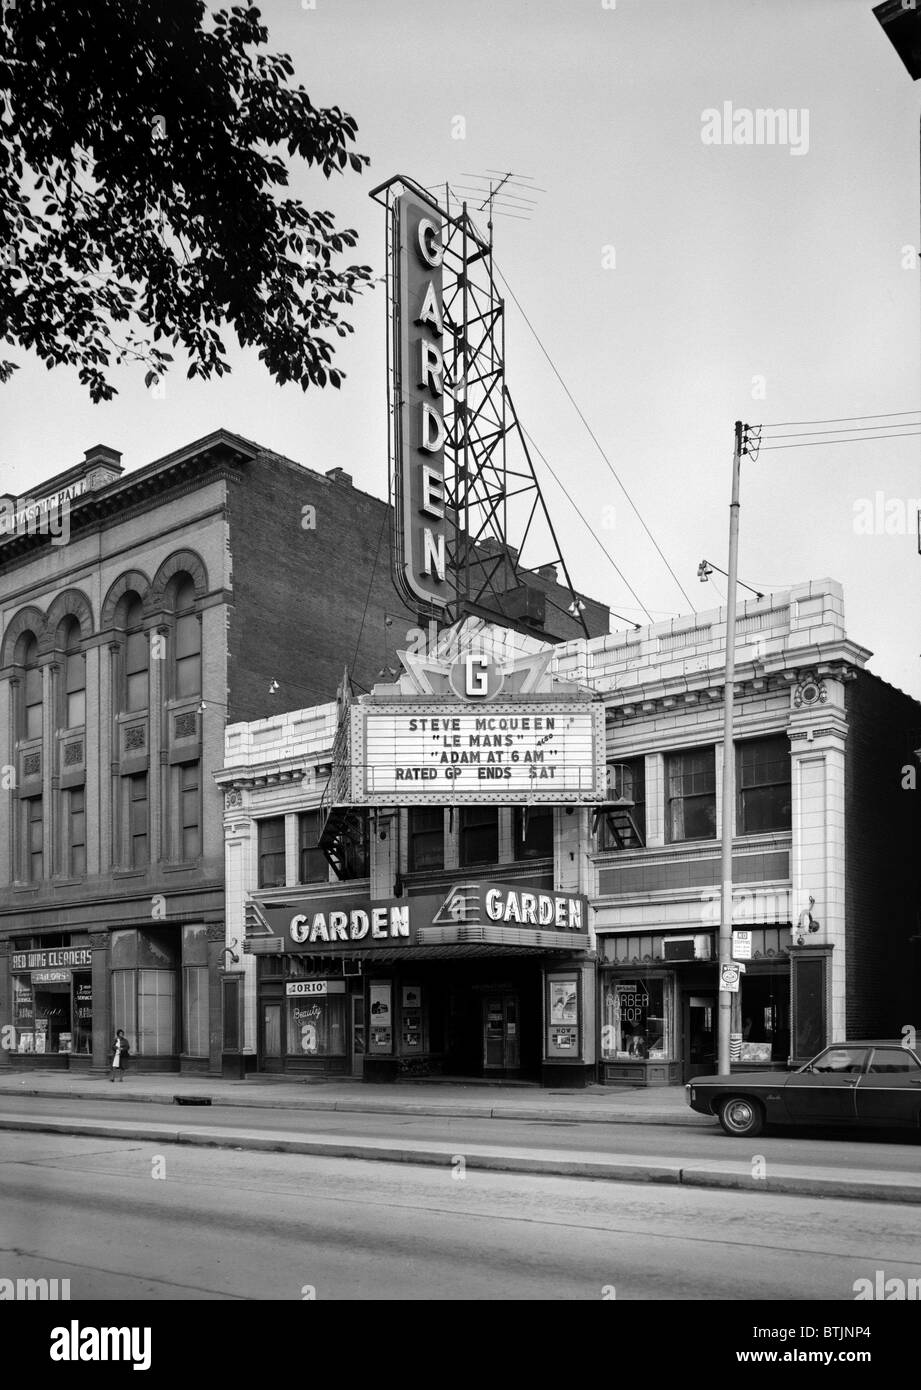 Kinos, The Garden Theater, LE MANS, zeigt mit Steve McQueen, Baujahr 1927, 12.10.14, Westen North Avenue, Pittsburgh, Pennsylvania, ca. 1971. Stockfoto